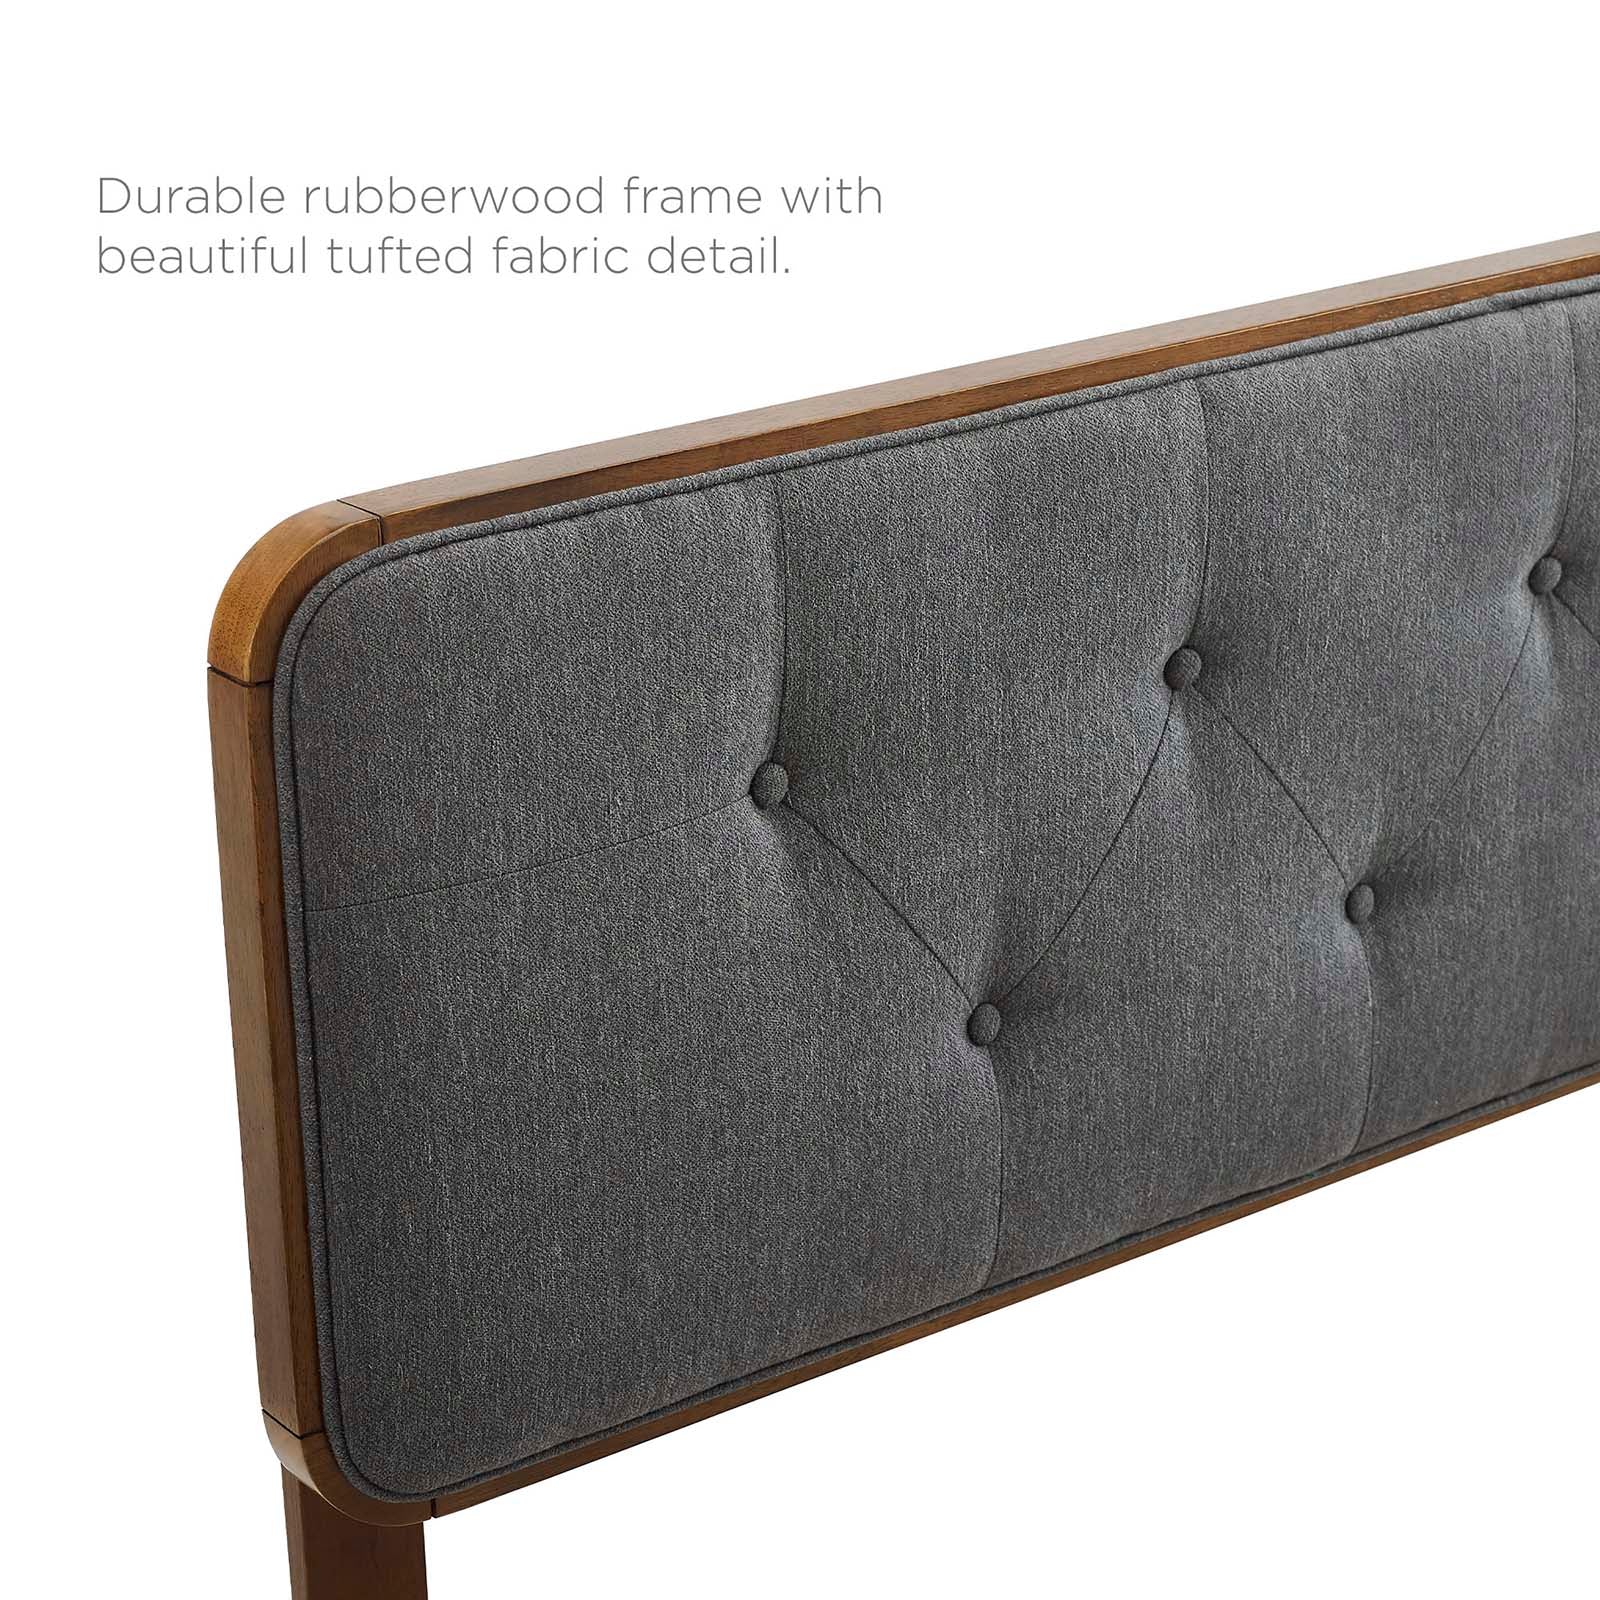 Modway Beds - Bridgette Queen Wood Platform Bed With Angular Frame Walnut Charcoal